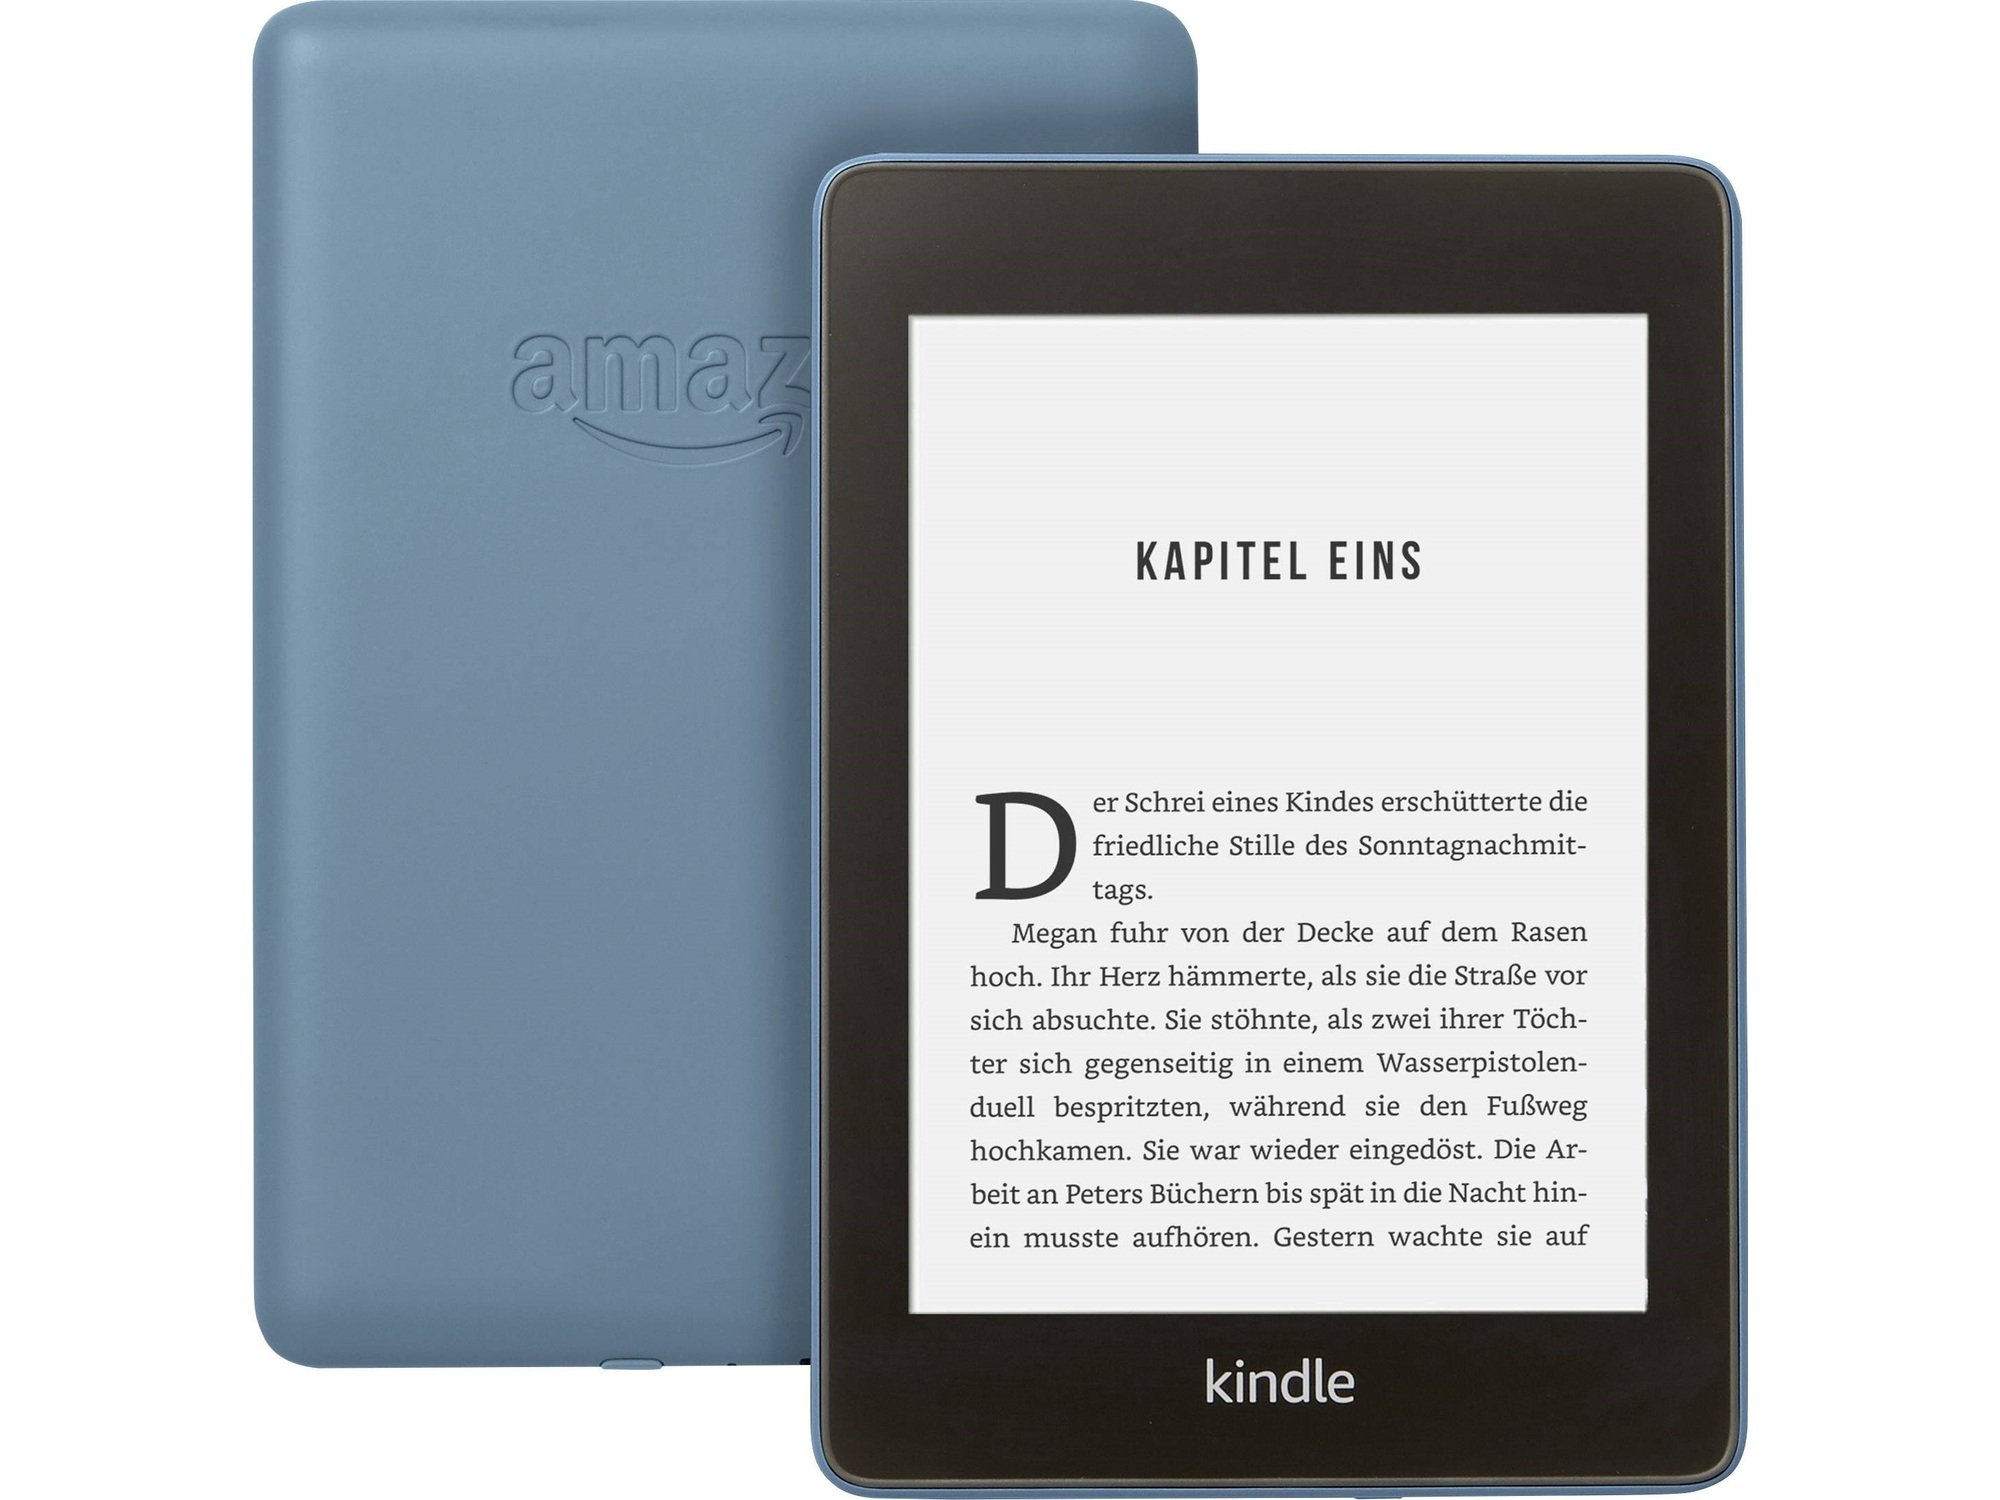 Amazon Kindle Paperwhite Waterproof 8GB